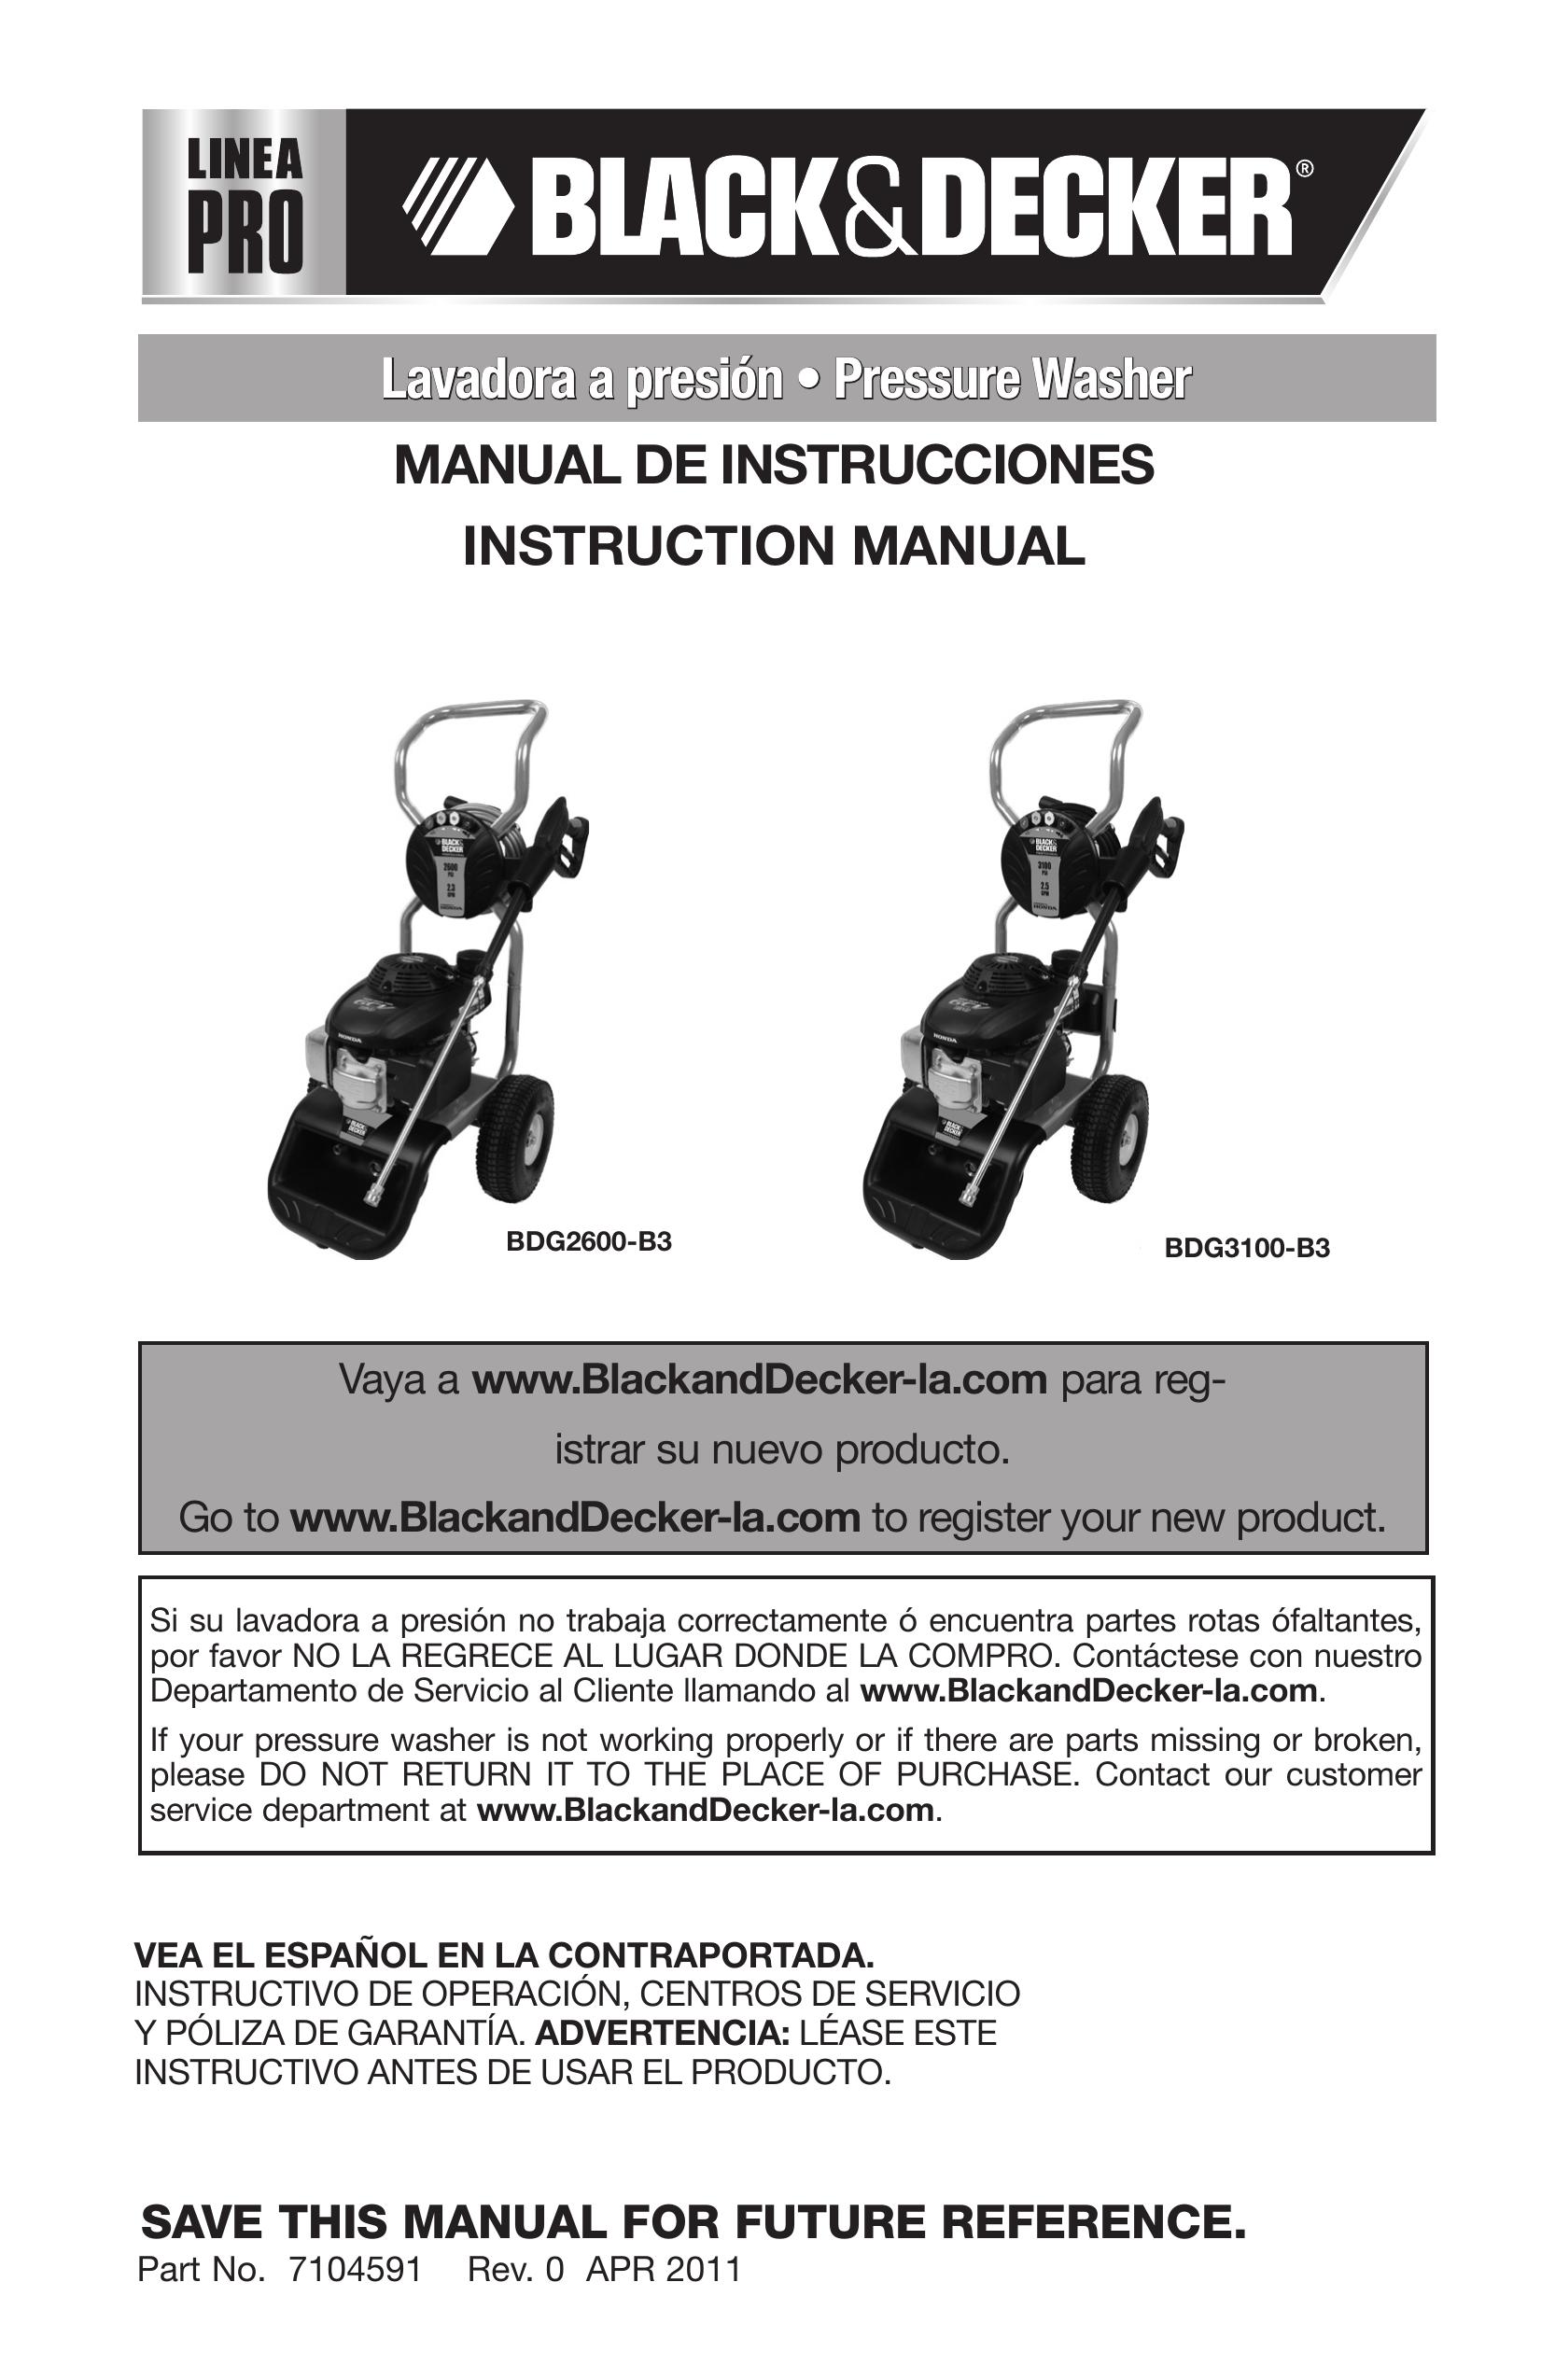 Black & Decker BDG2600-B3 Pressure Washer User Manual